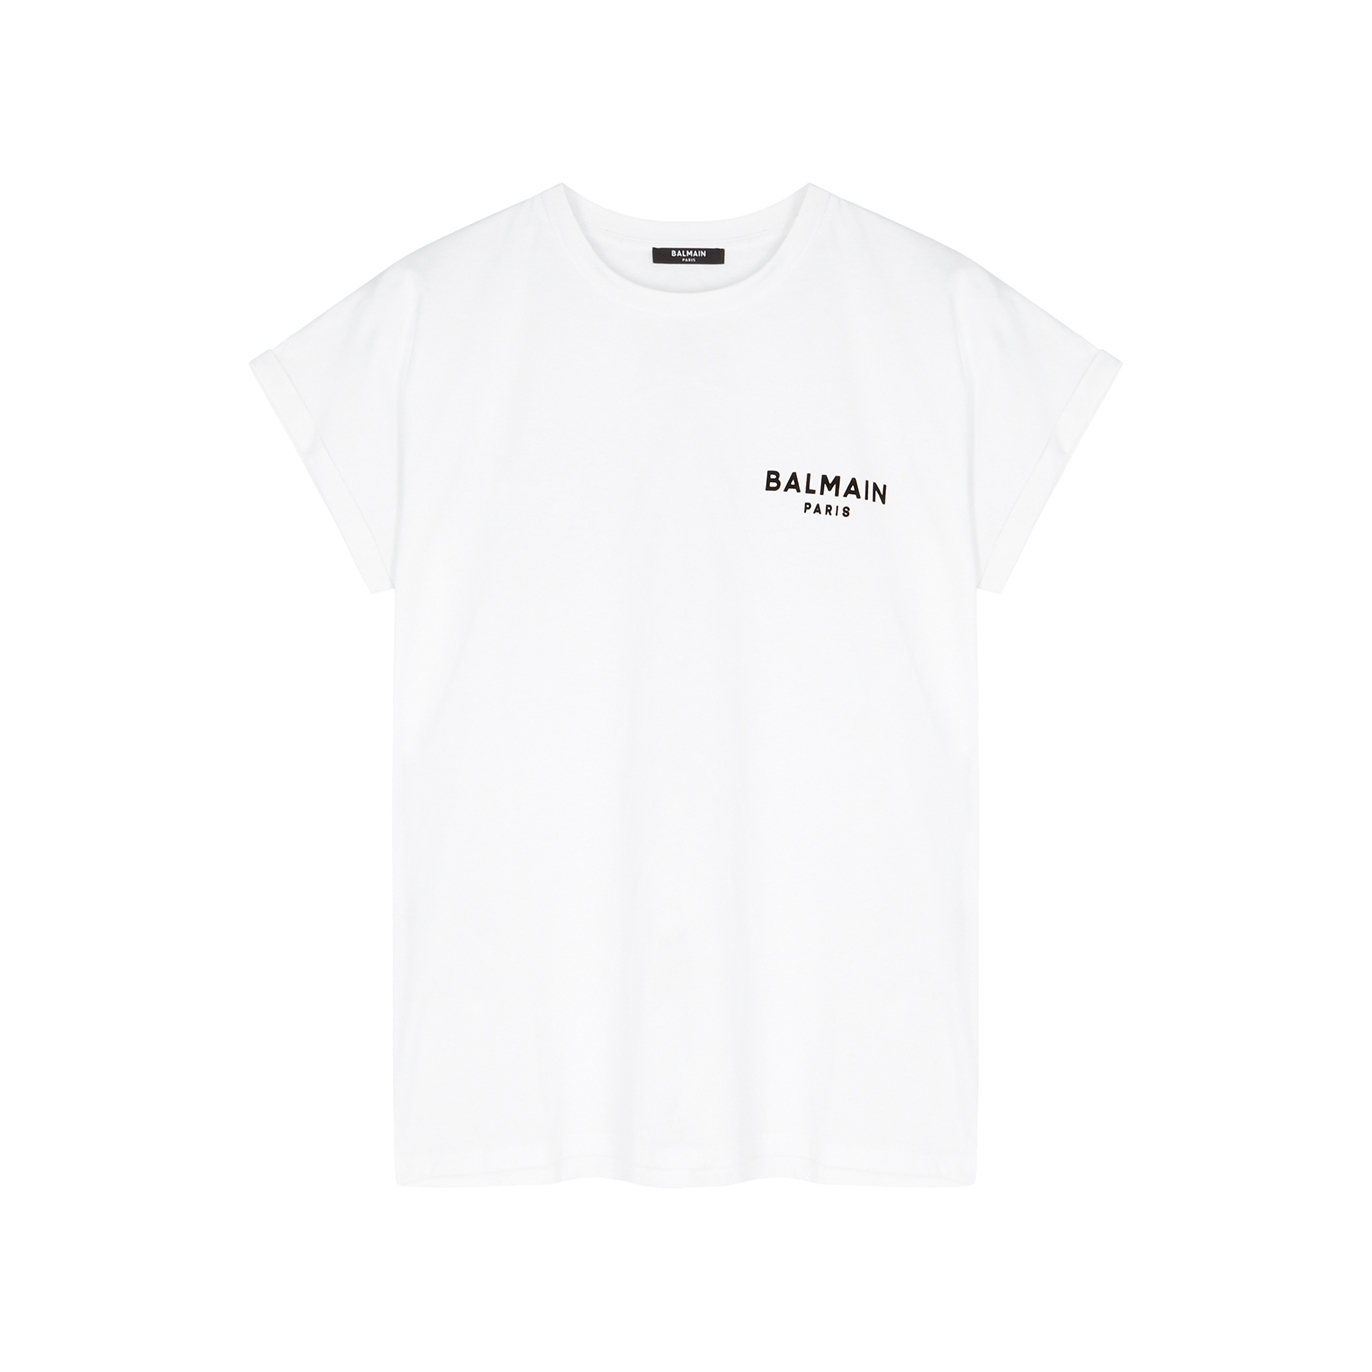 Balmain White Logo Cotton T-shirt - White And Black - S